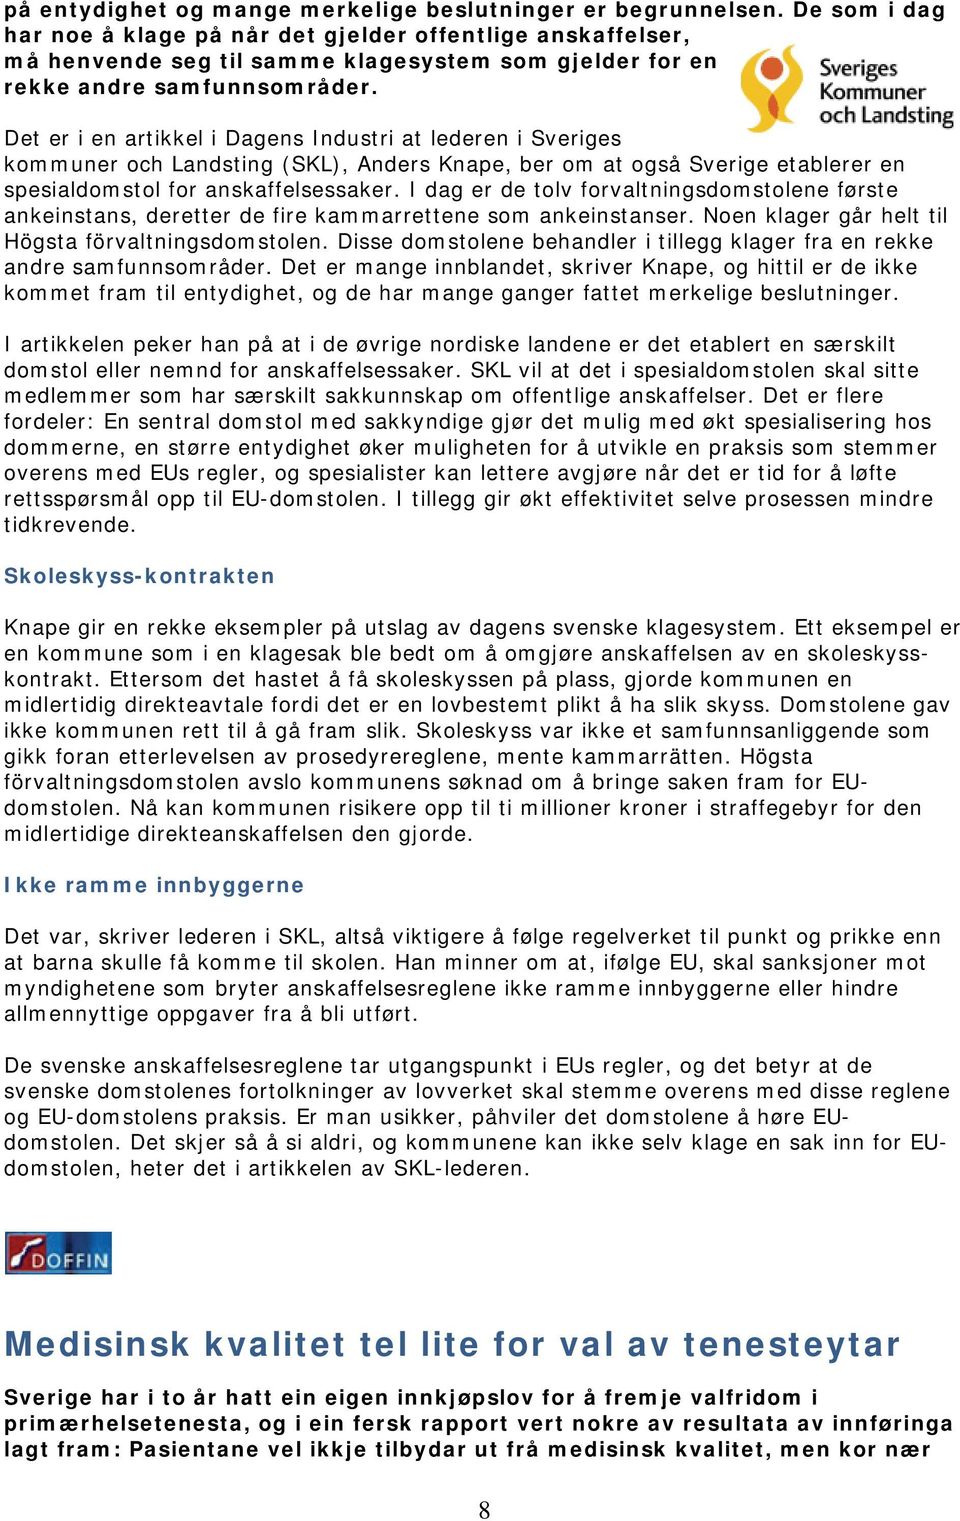 Det er i en artikkel i Dagens Industri at lederen i Sveriges kommuner och Landsting (SKL), Anders Knape, ber om at også Sverige etablerer en spesialdomstol for anskaffelsessaker.